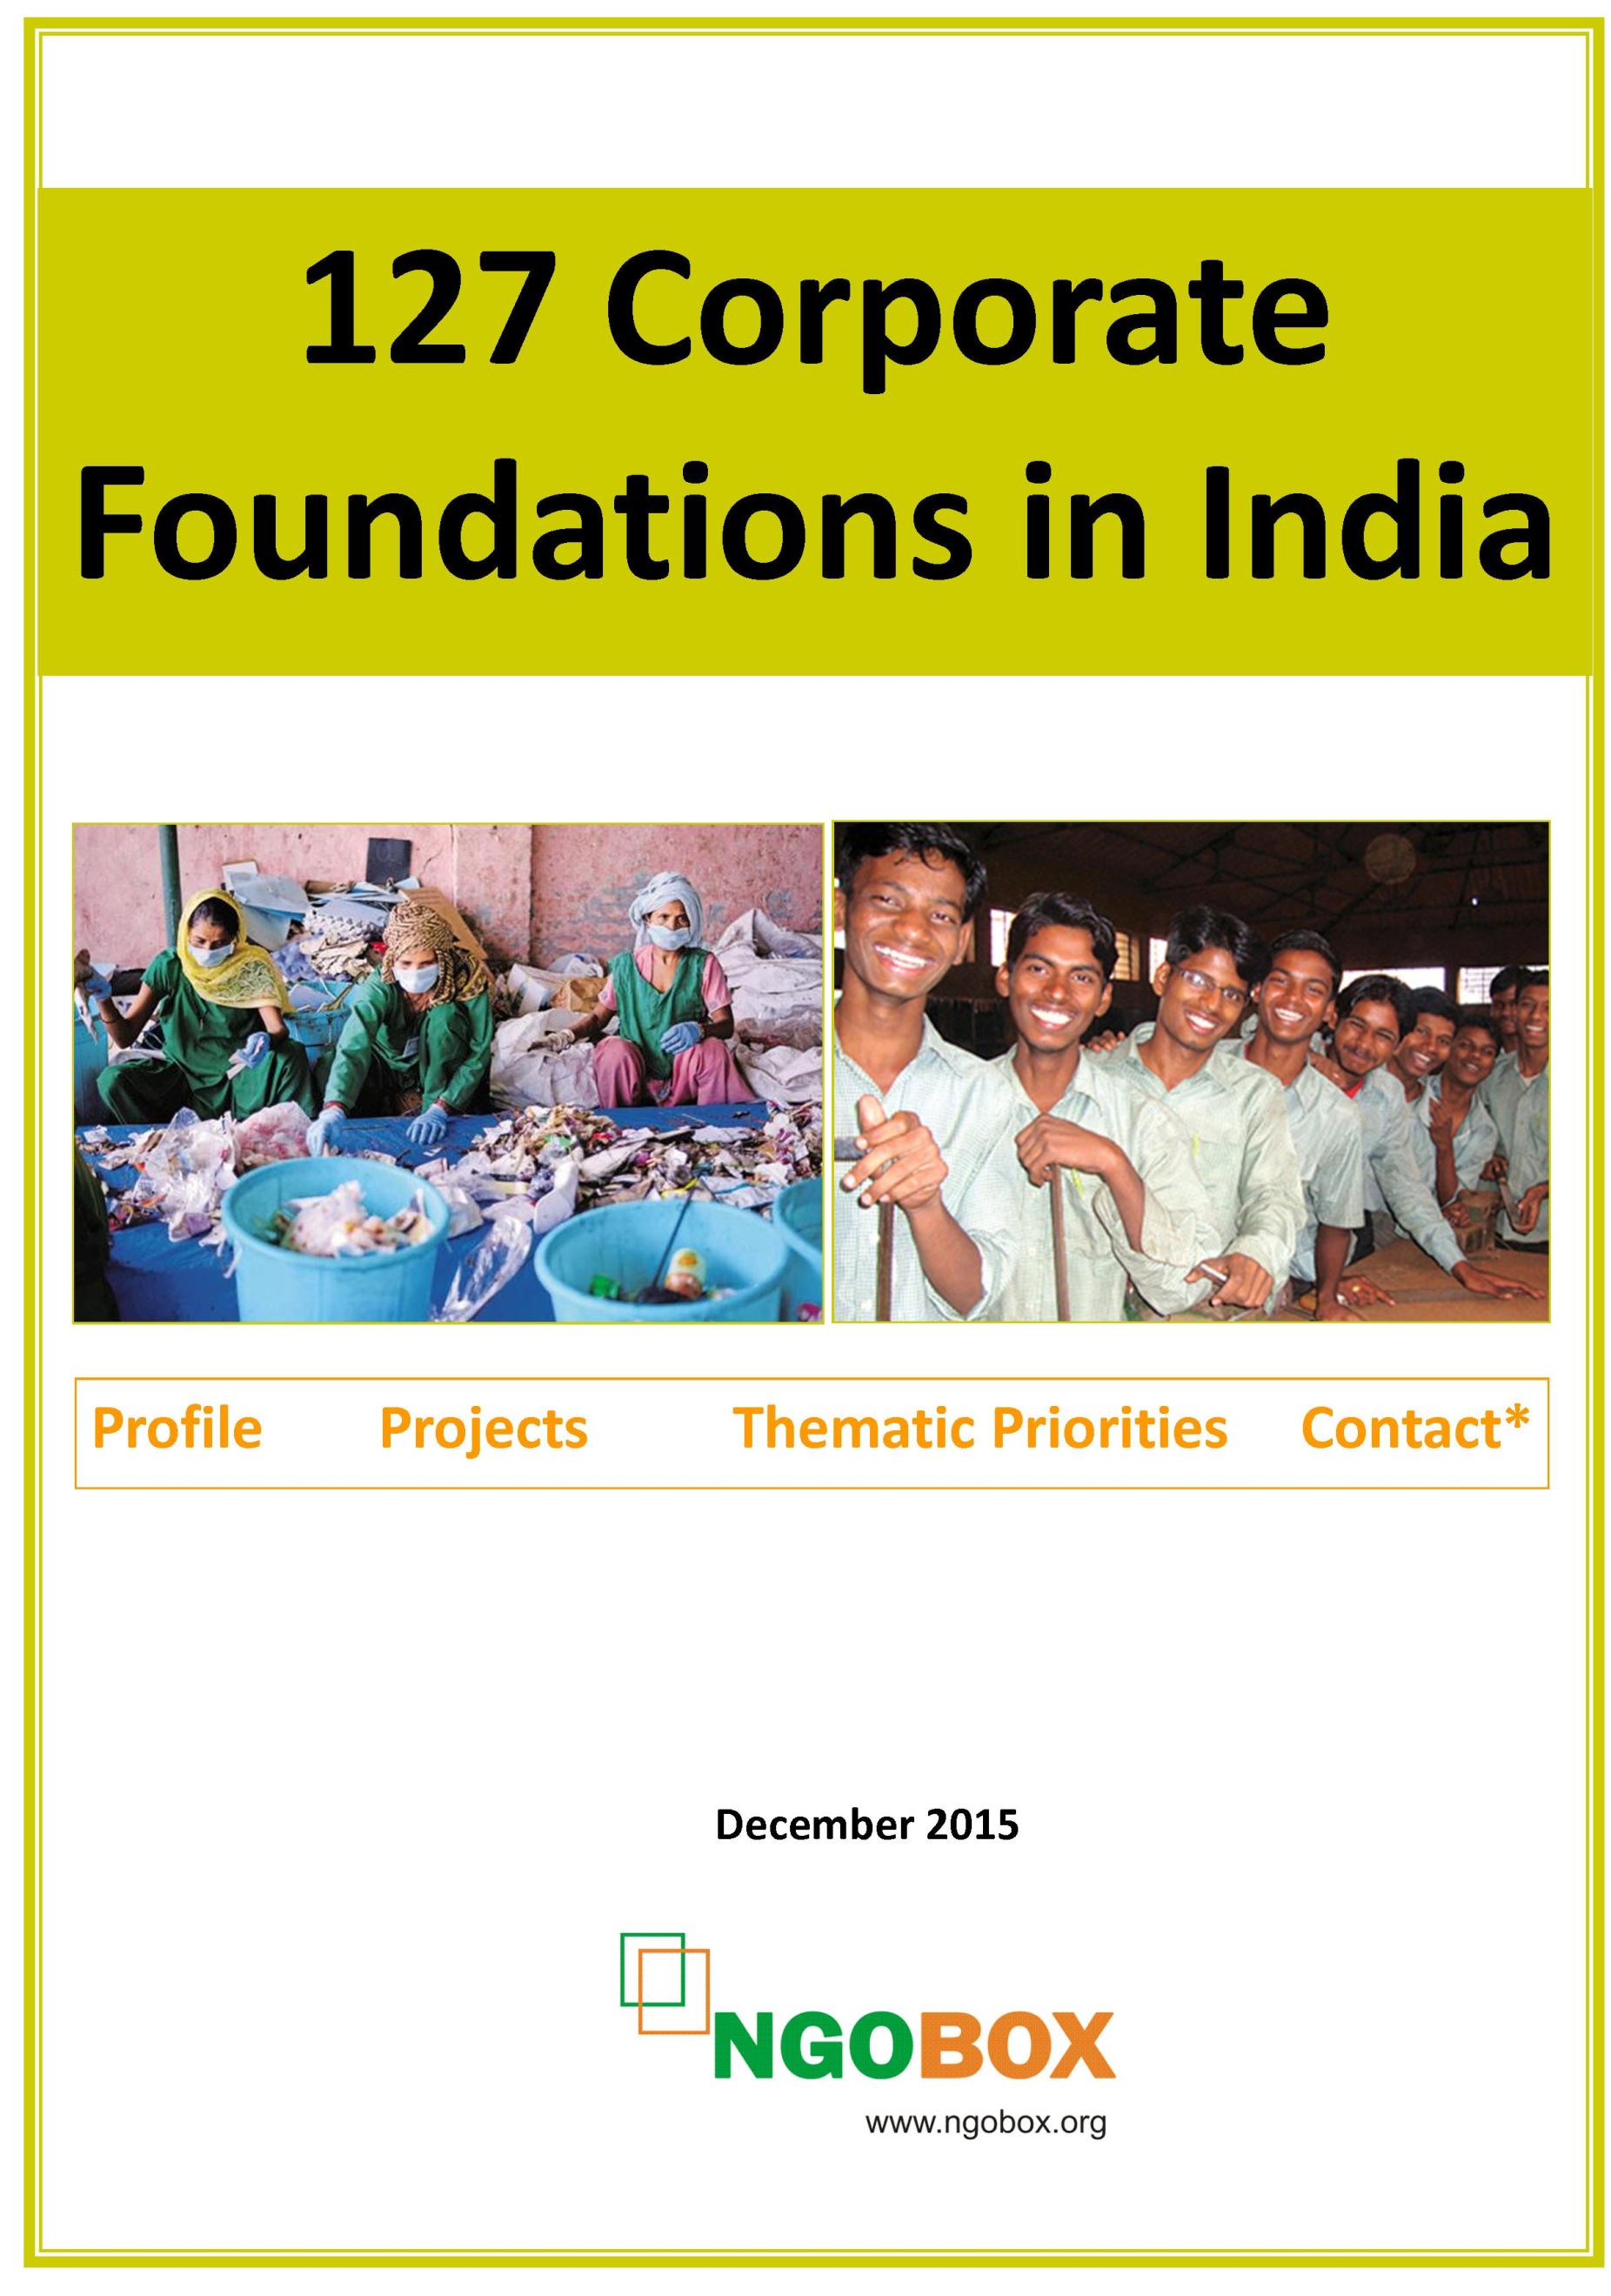 127 Corporate (CSR) Foundations in India